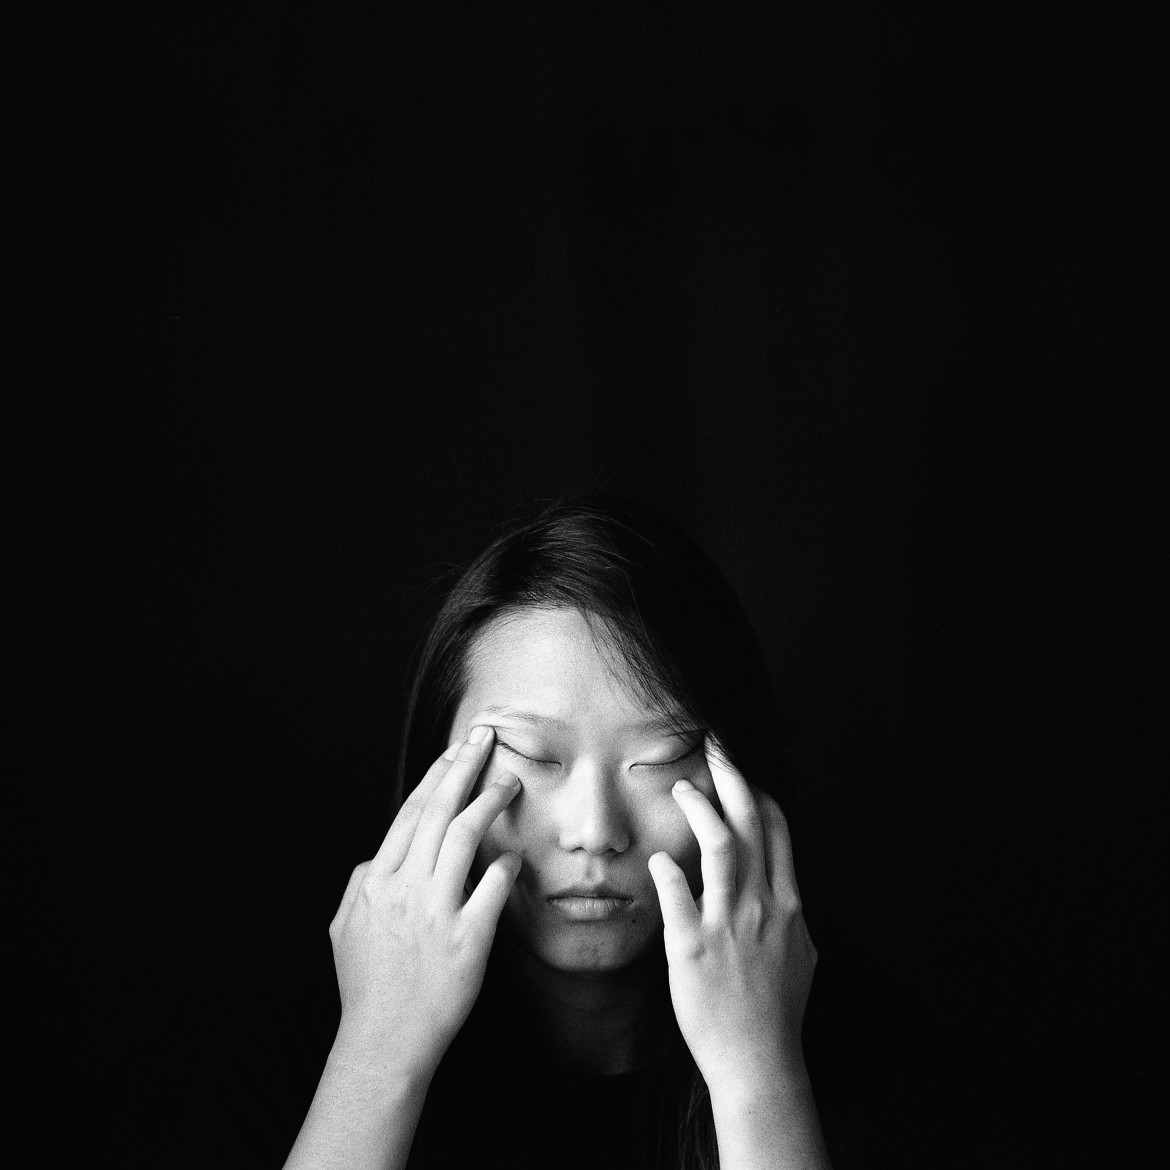 fot. KyeongJun Yan, z cyklu "Methamorphosis", 1. nagroda w konkursie Zeiss Photography Awards 2020